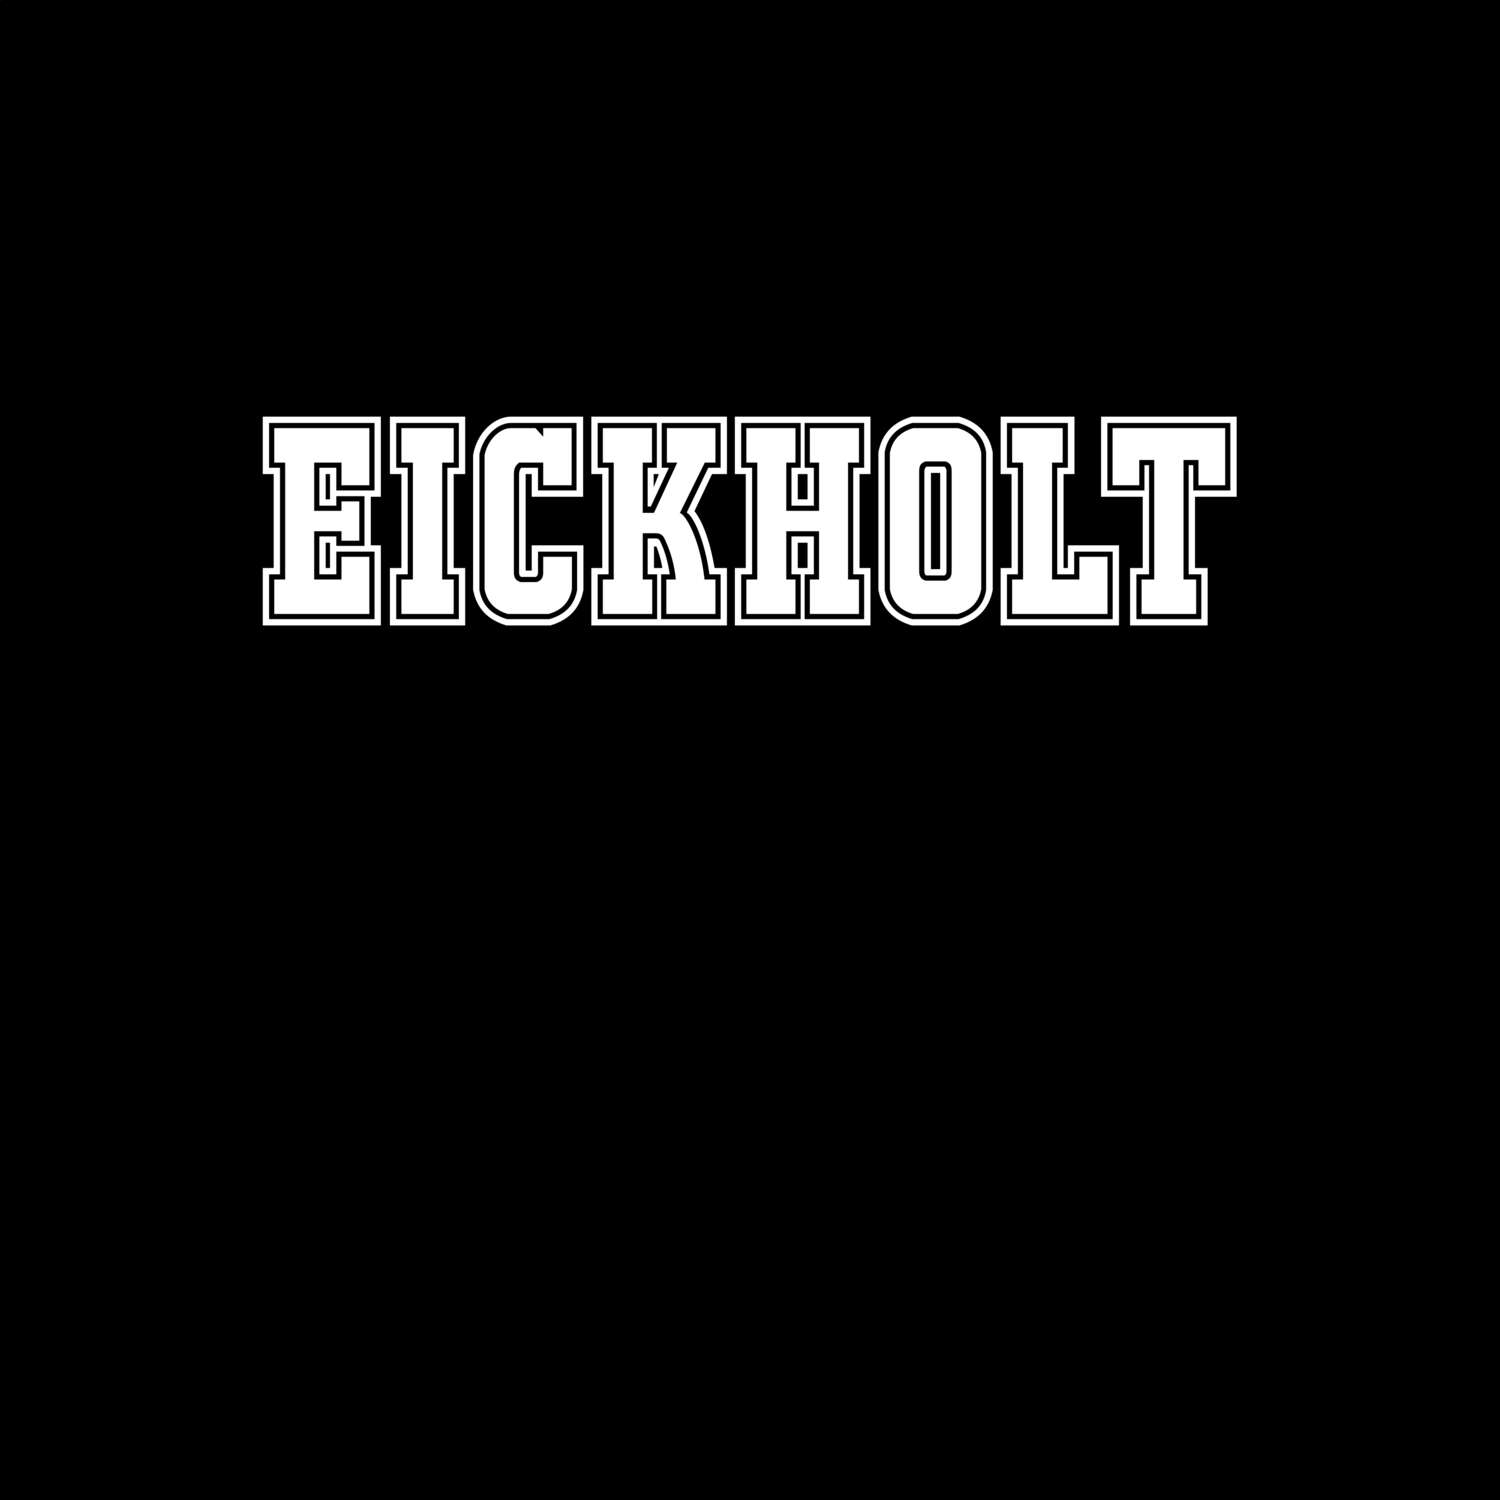 Eickholt T-Shirt »Classic«